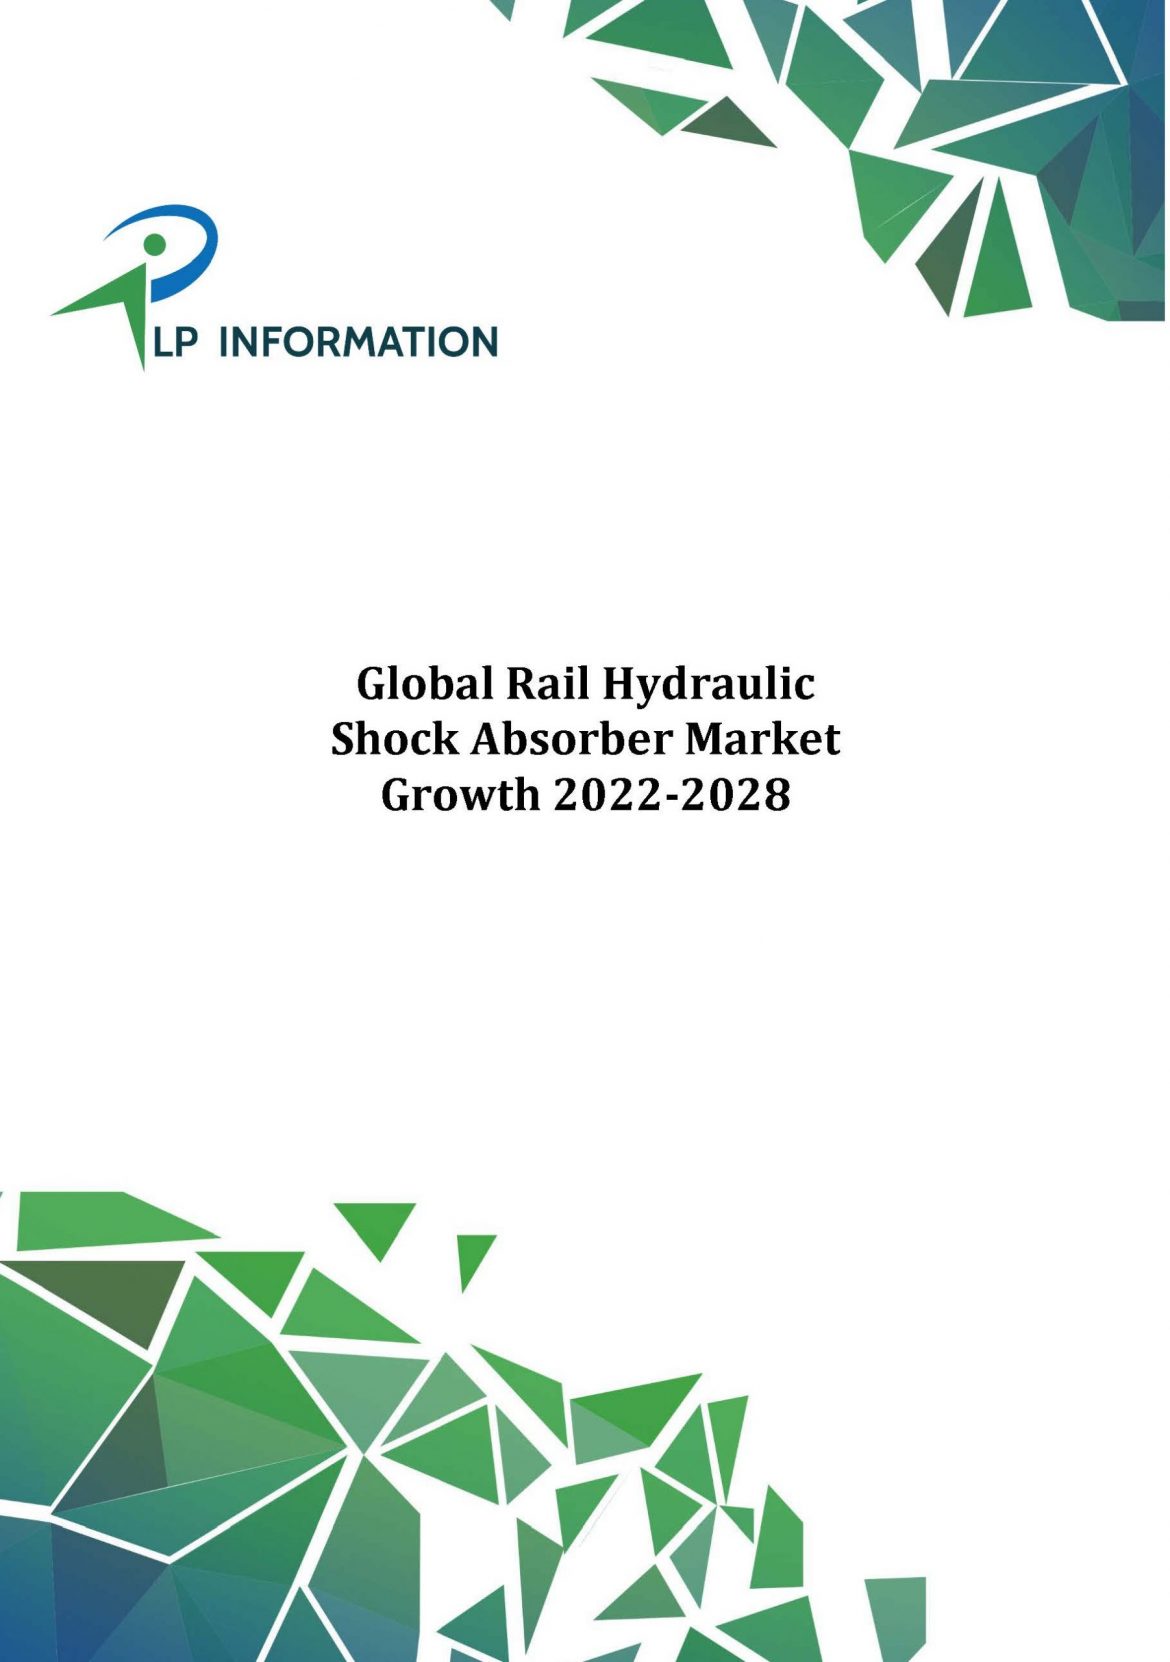 Global Rail Hydraulic Shock Absorber Market Growth 2022-2028